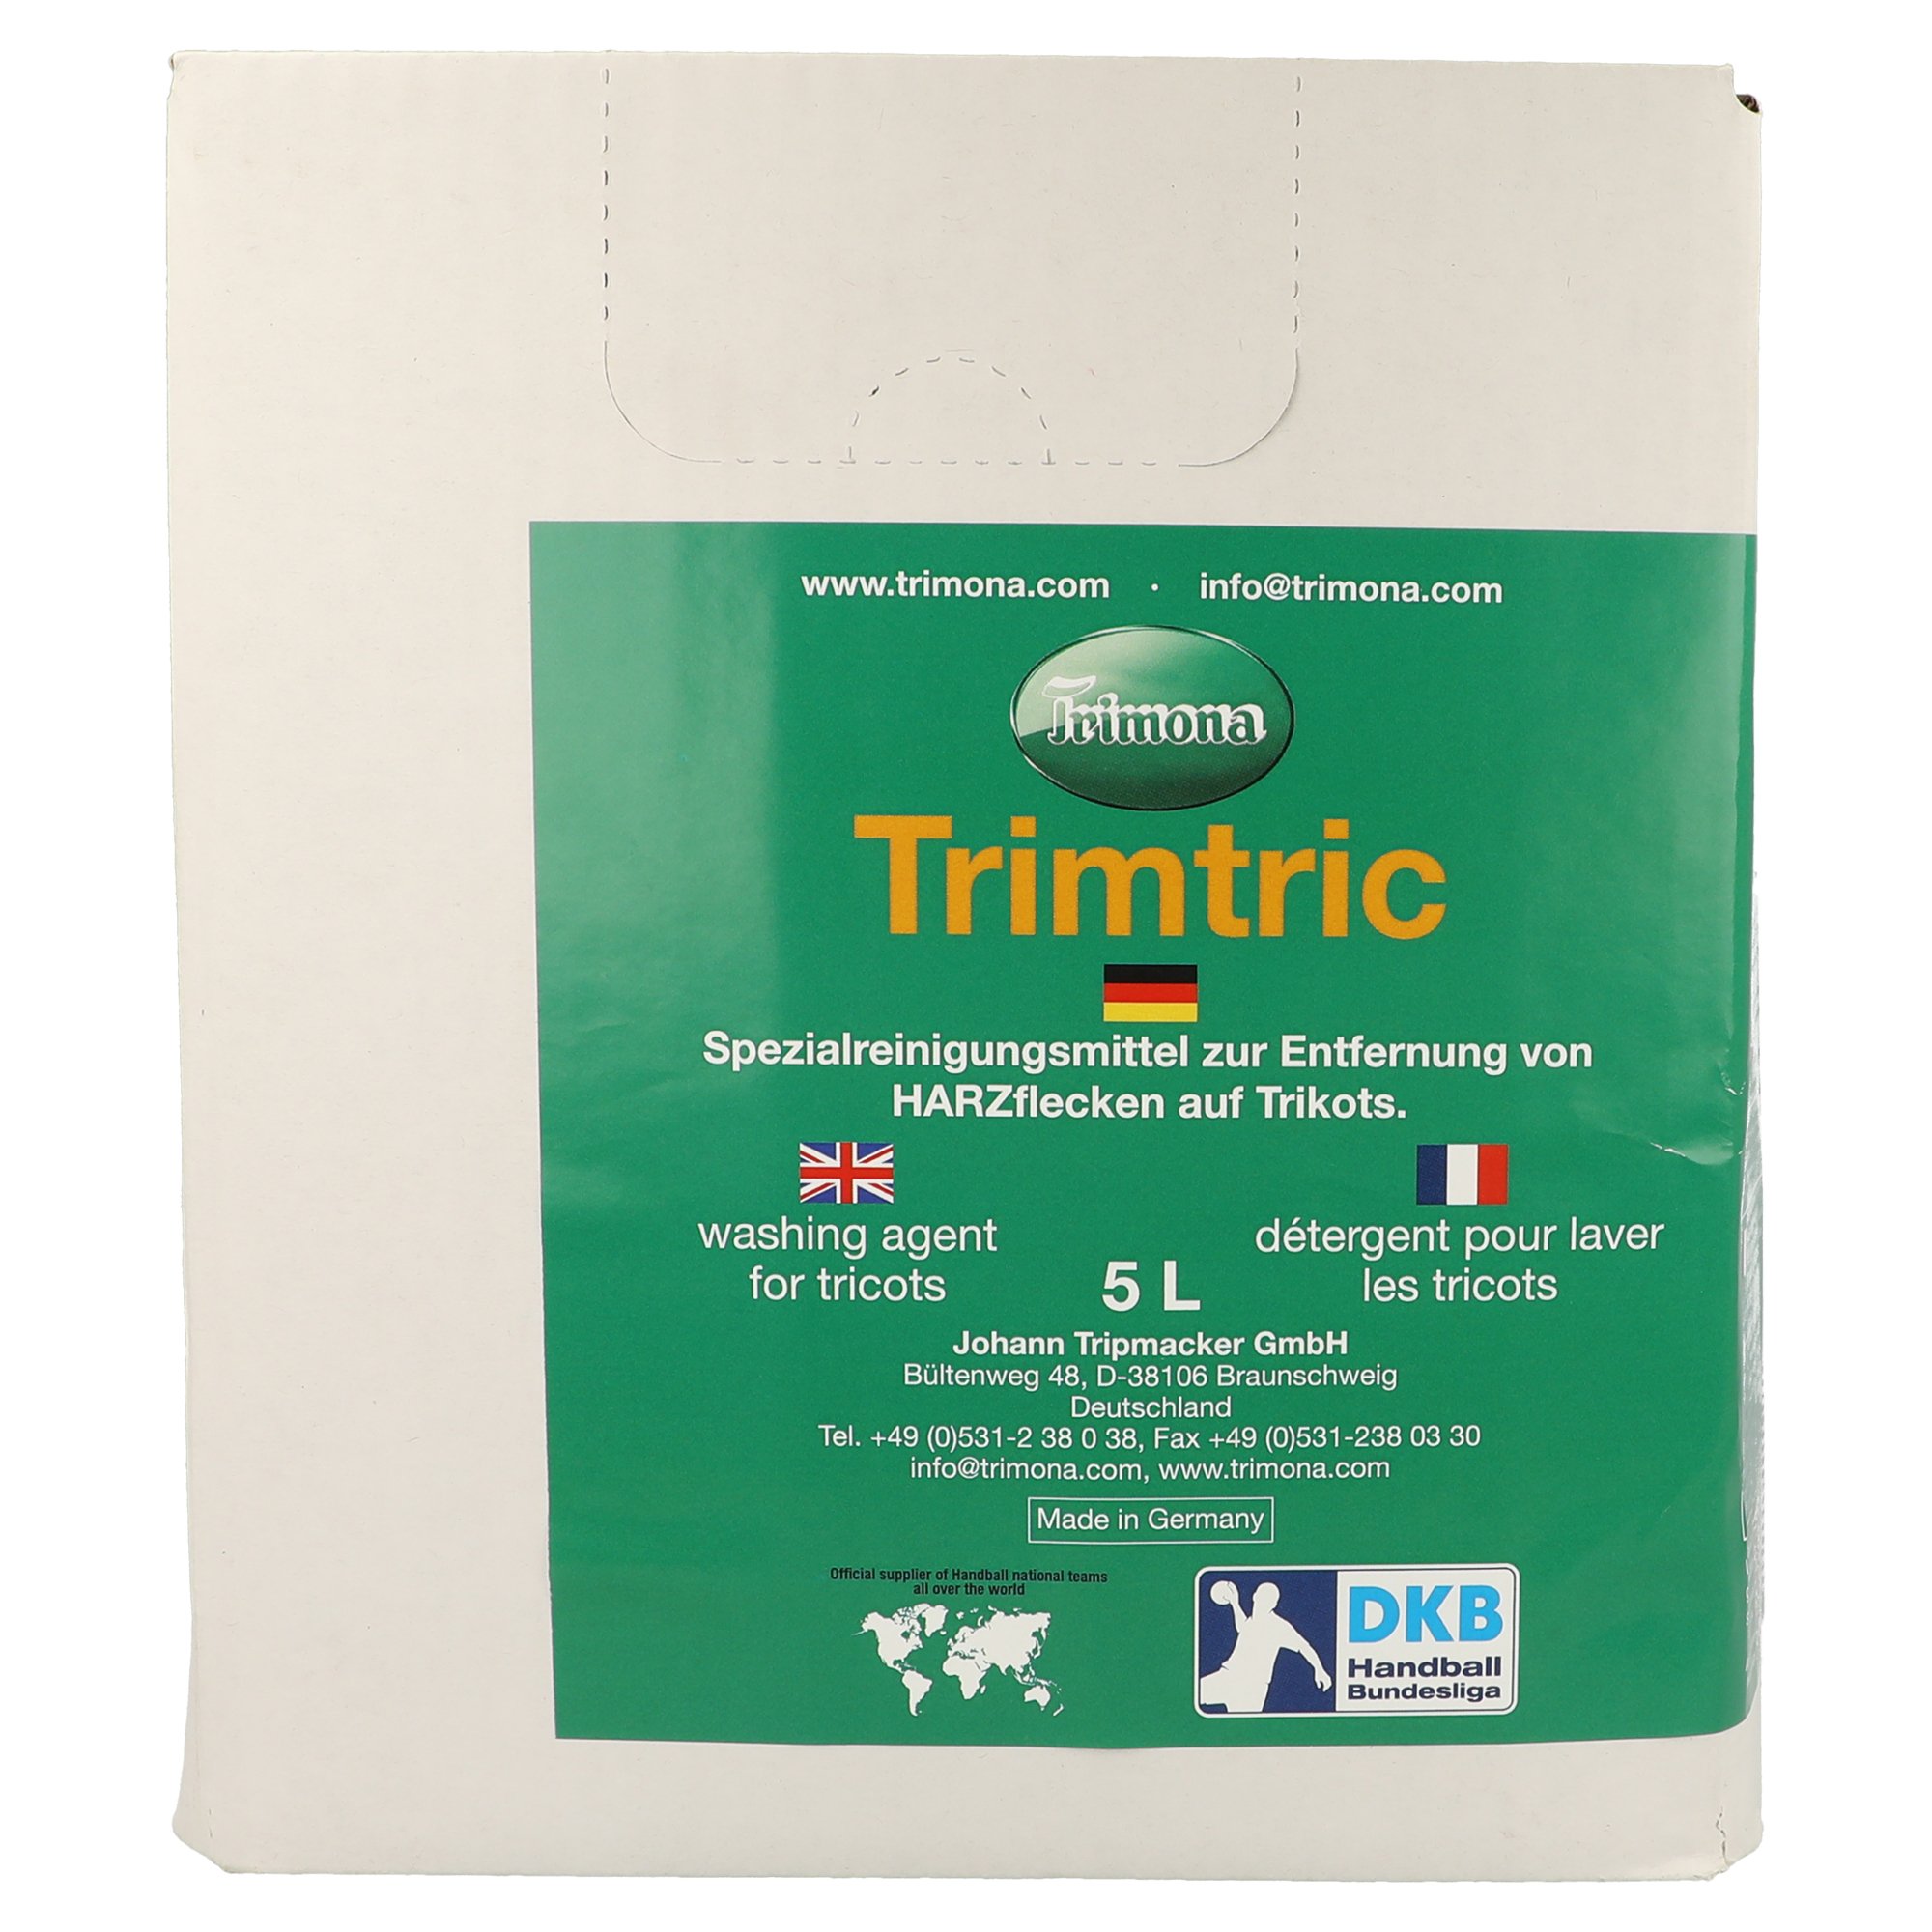 Trimona Trimtric Trikot Waschmittel 5 Liter